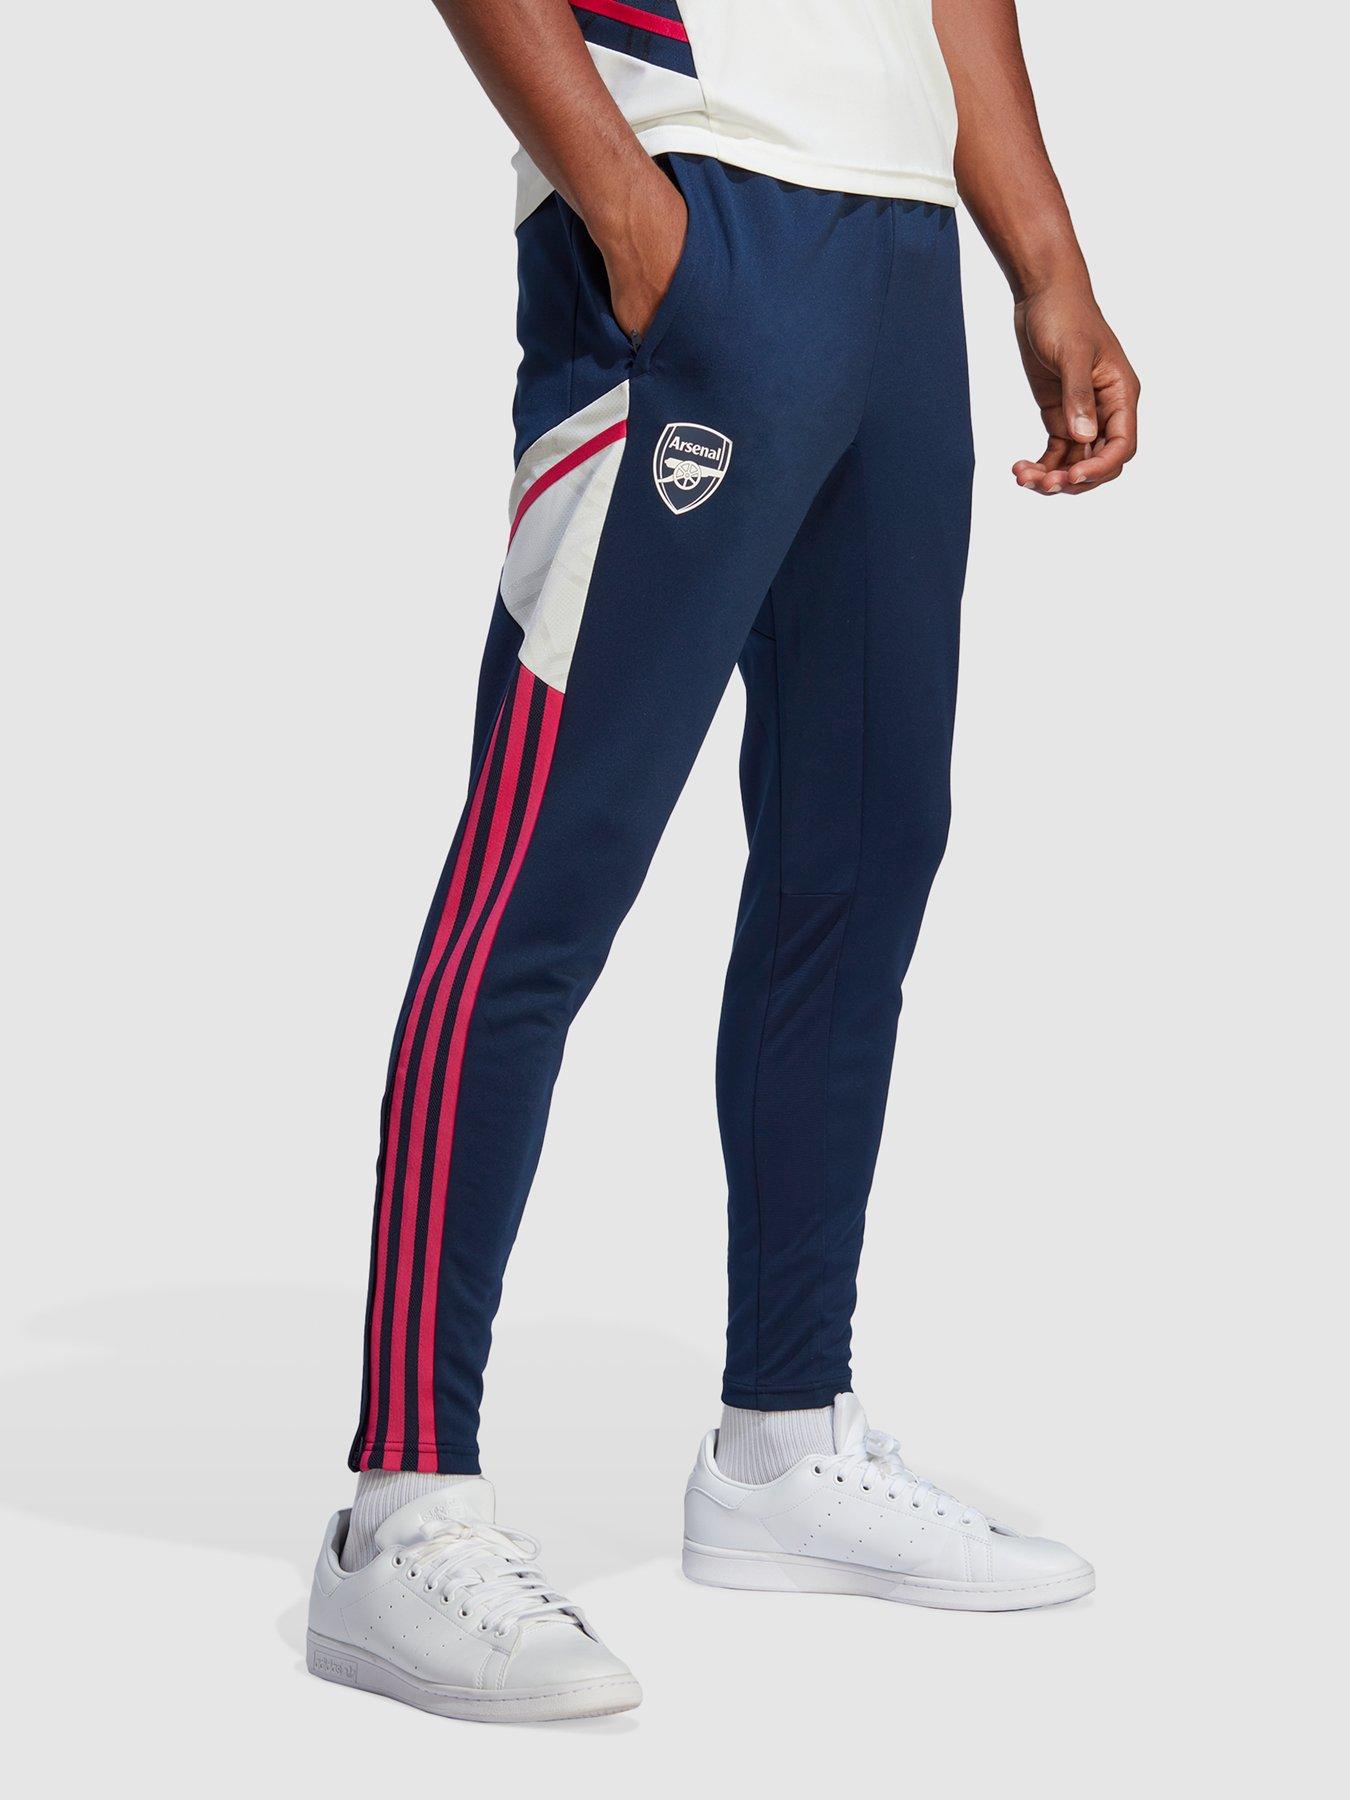 Arsenal Training Pants - Navy